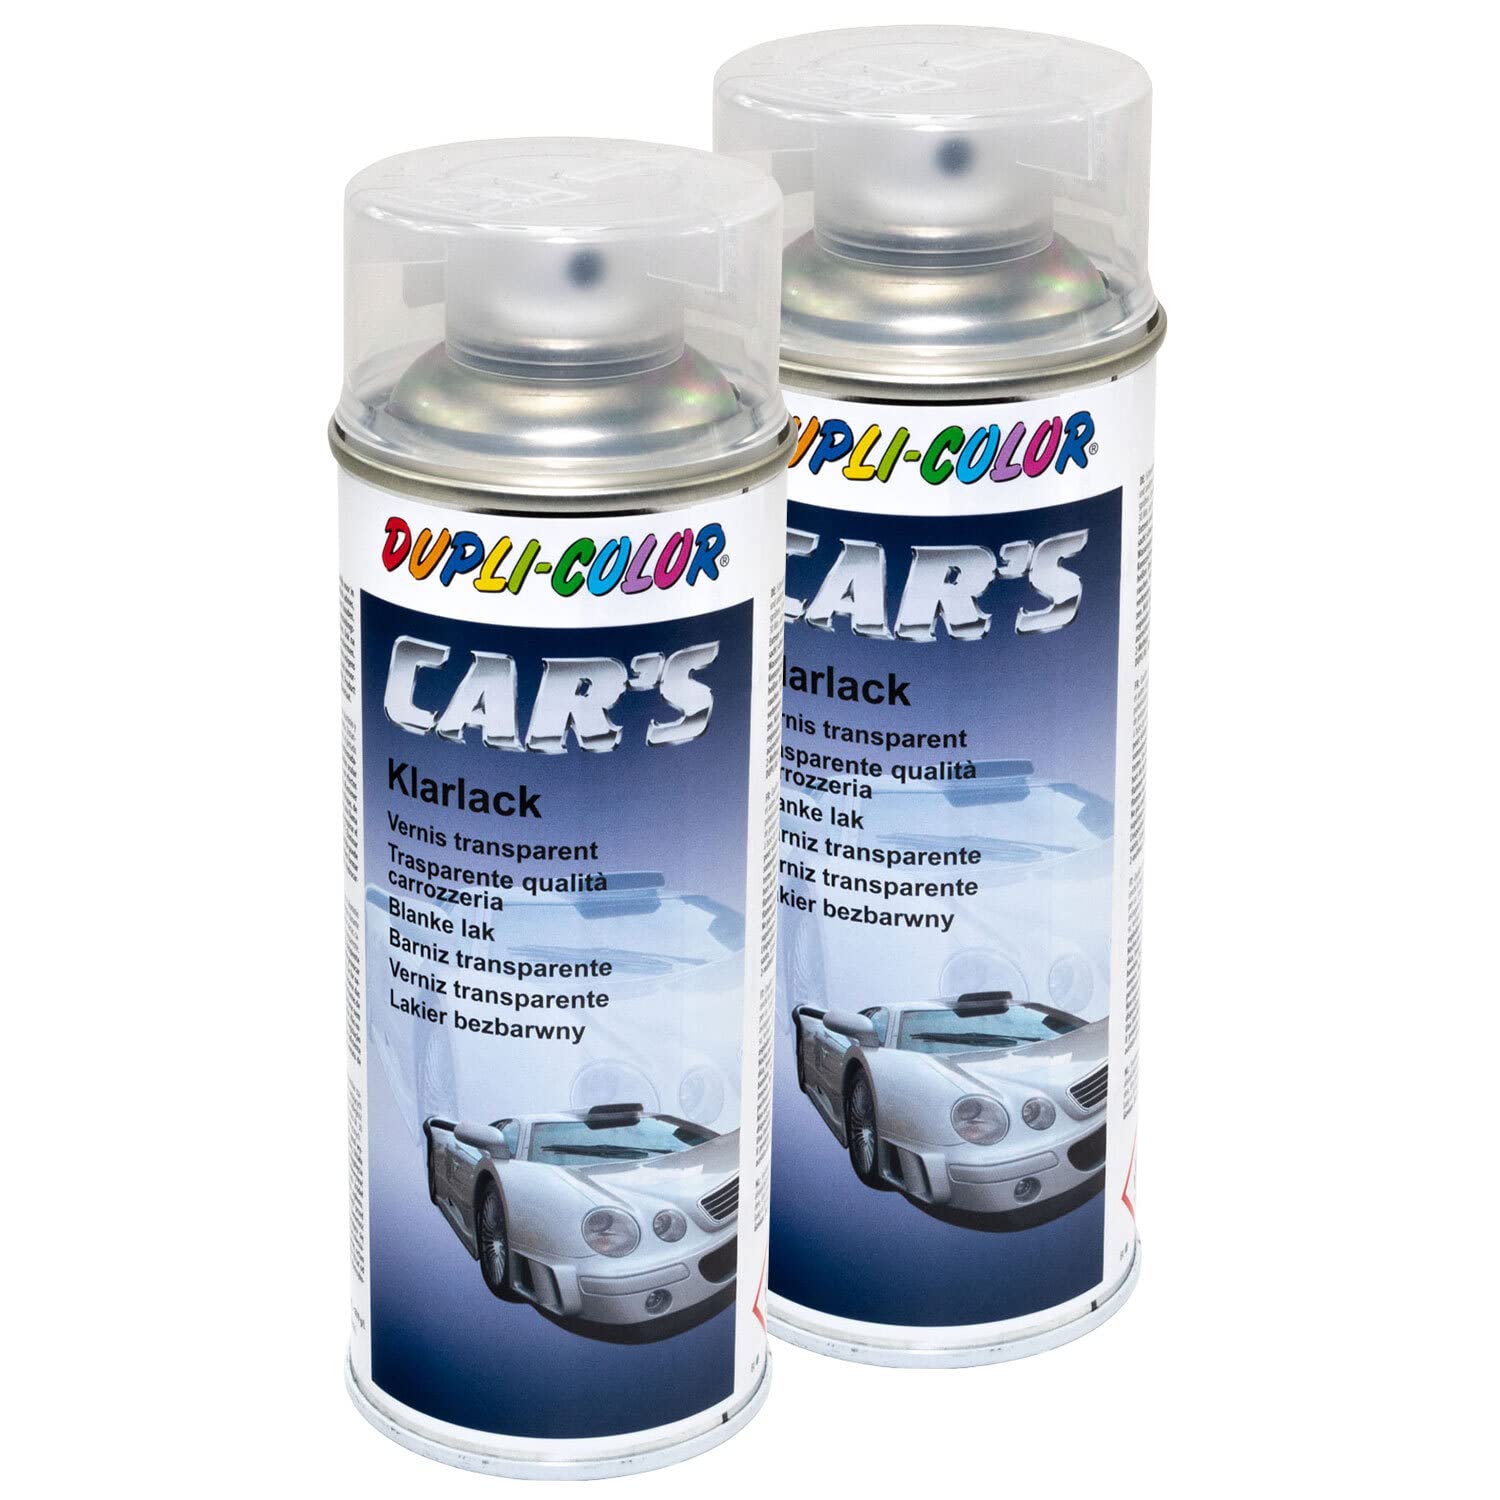 Klarlack Lack Spray Car's Dupli Color 385858 glänzend 2 X 400 ml von DUPLI_bundle